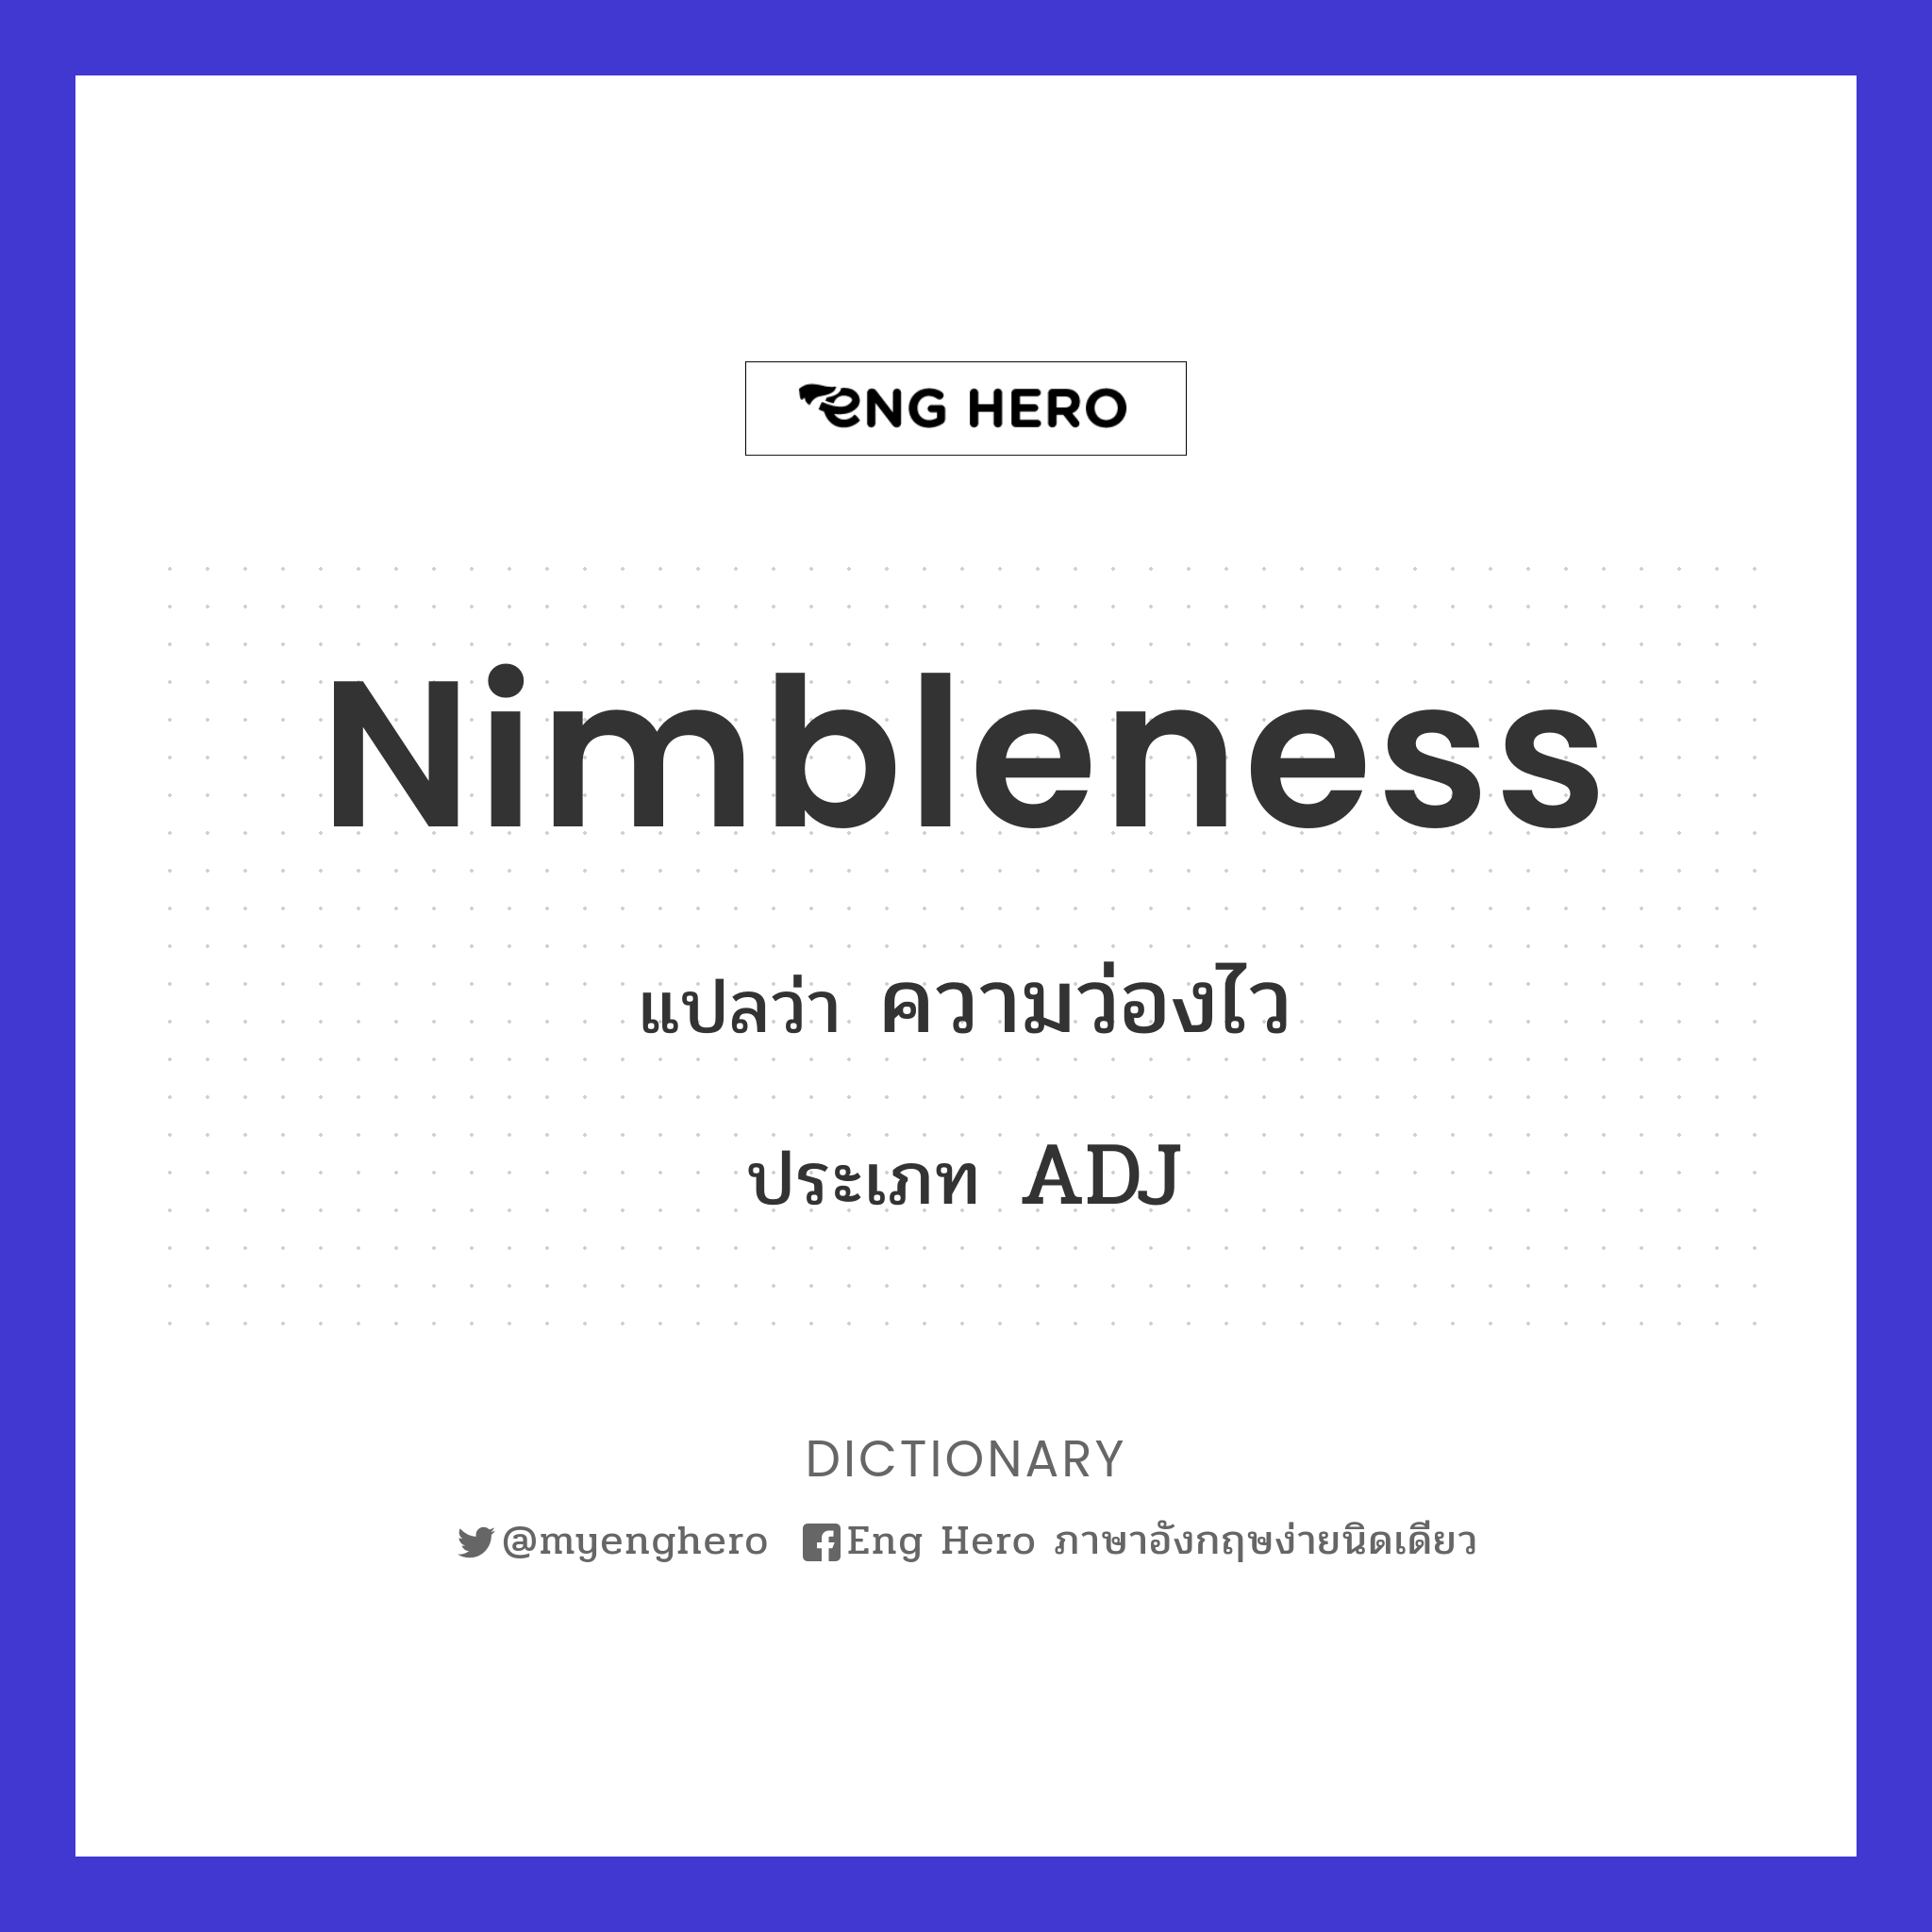 nimbleness